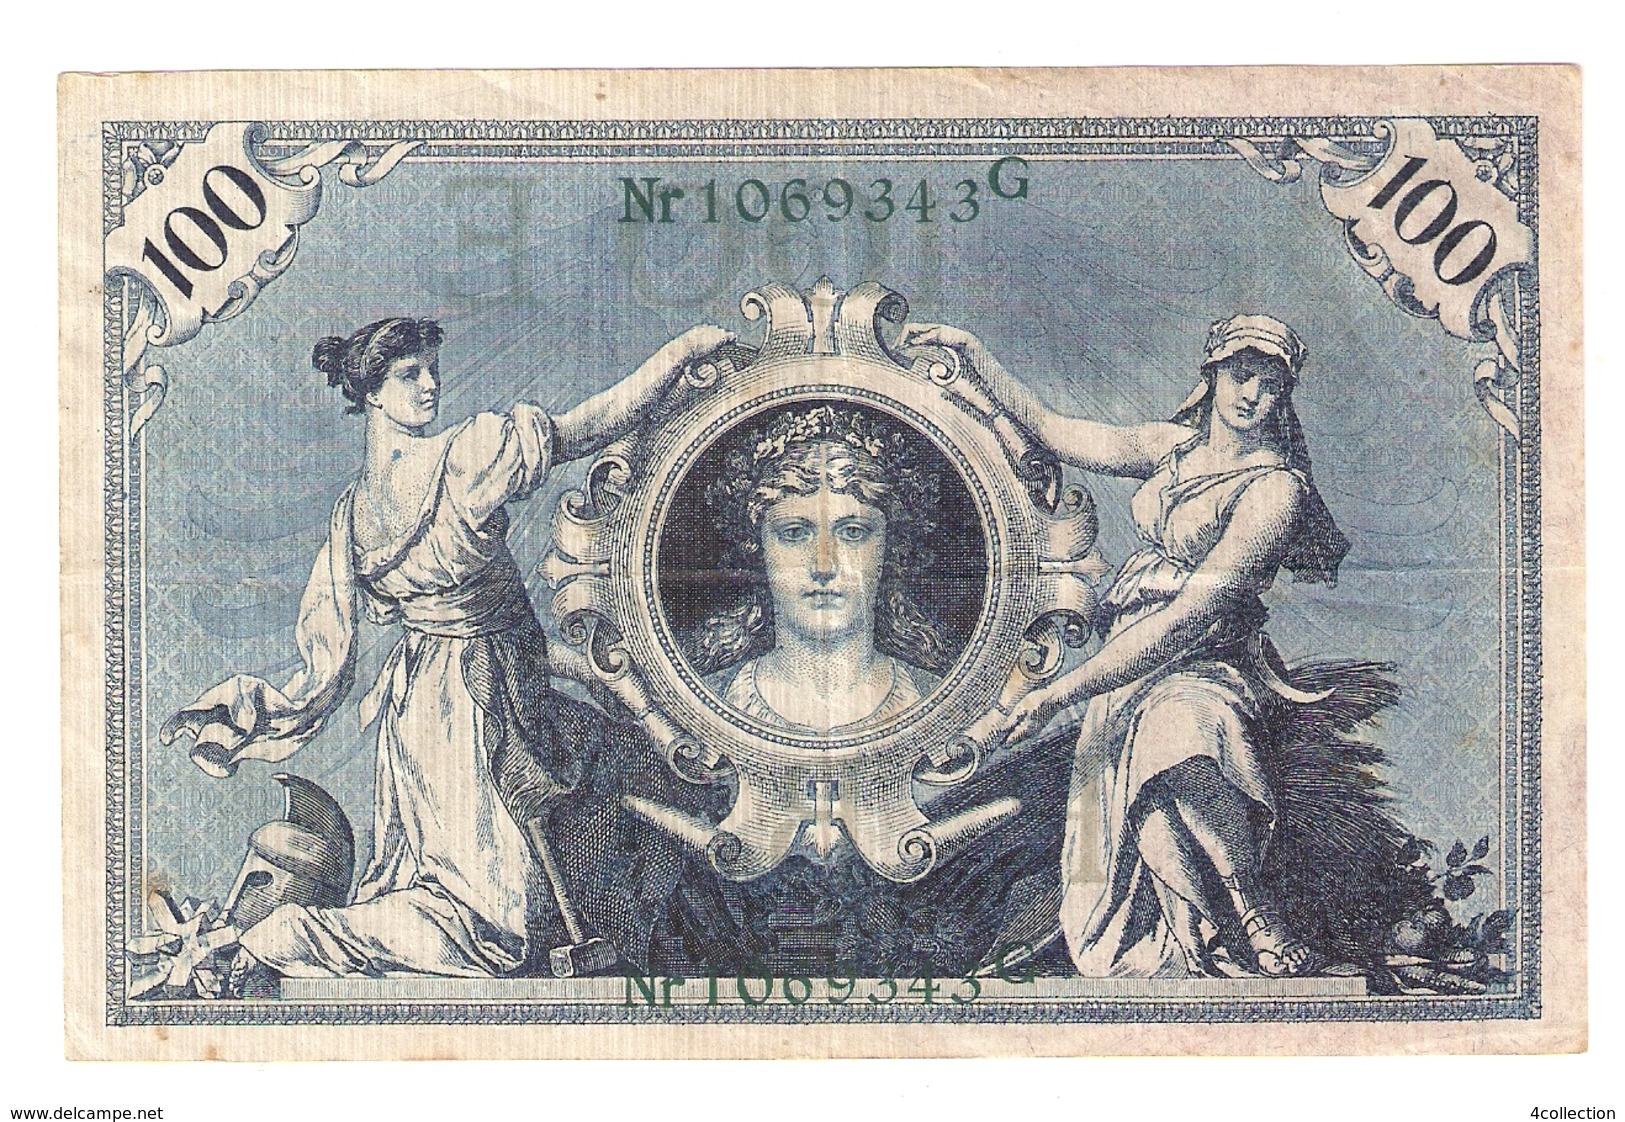 Pa6. Germany German Empire 100 Mark 1908 Reichsbanknote Green Seal & Ser. 1069343 G - 100 Mark